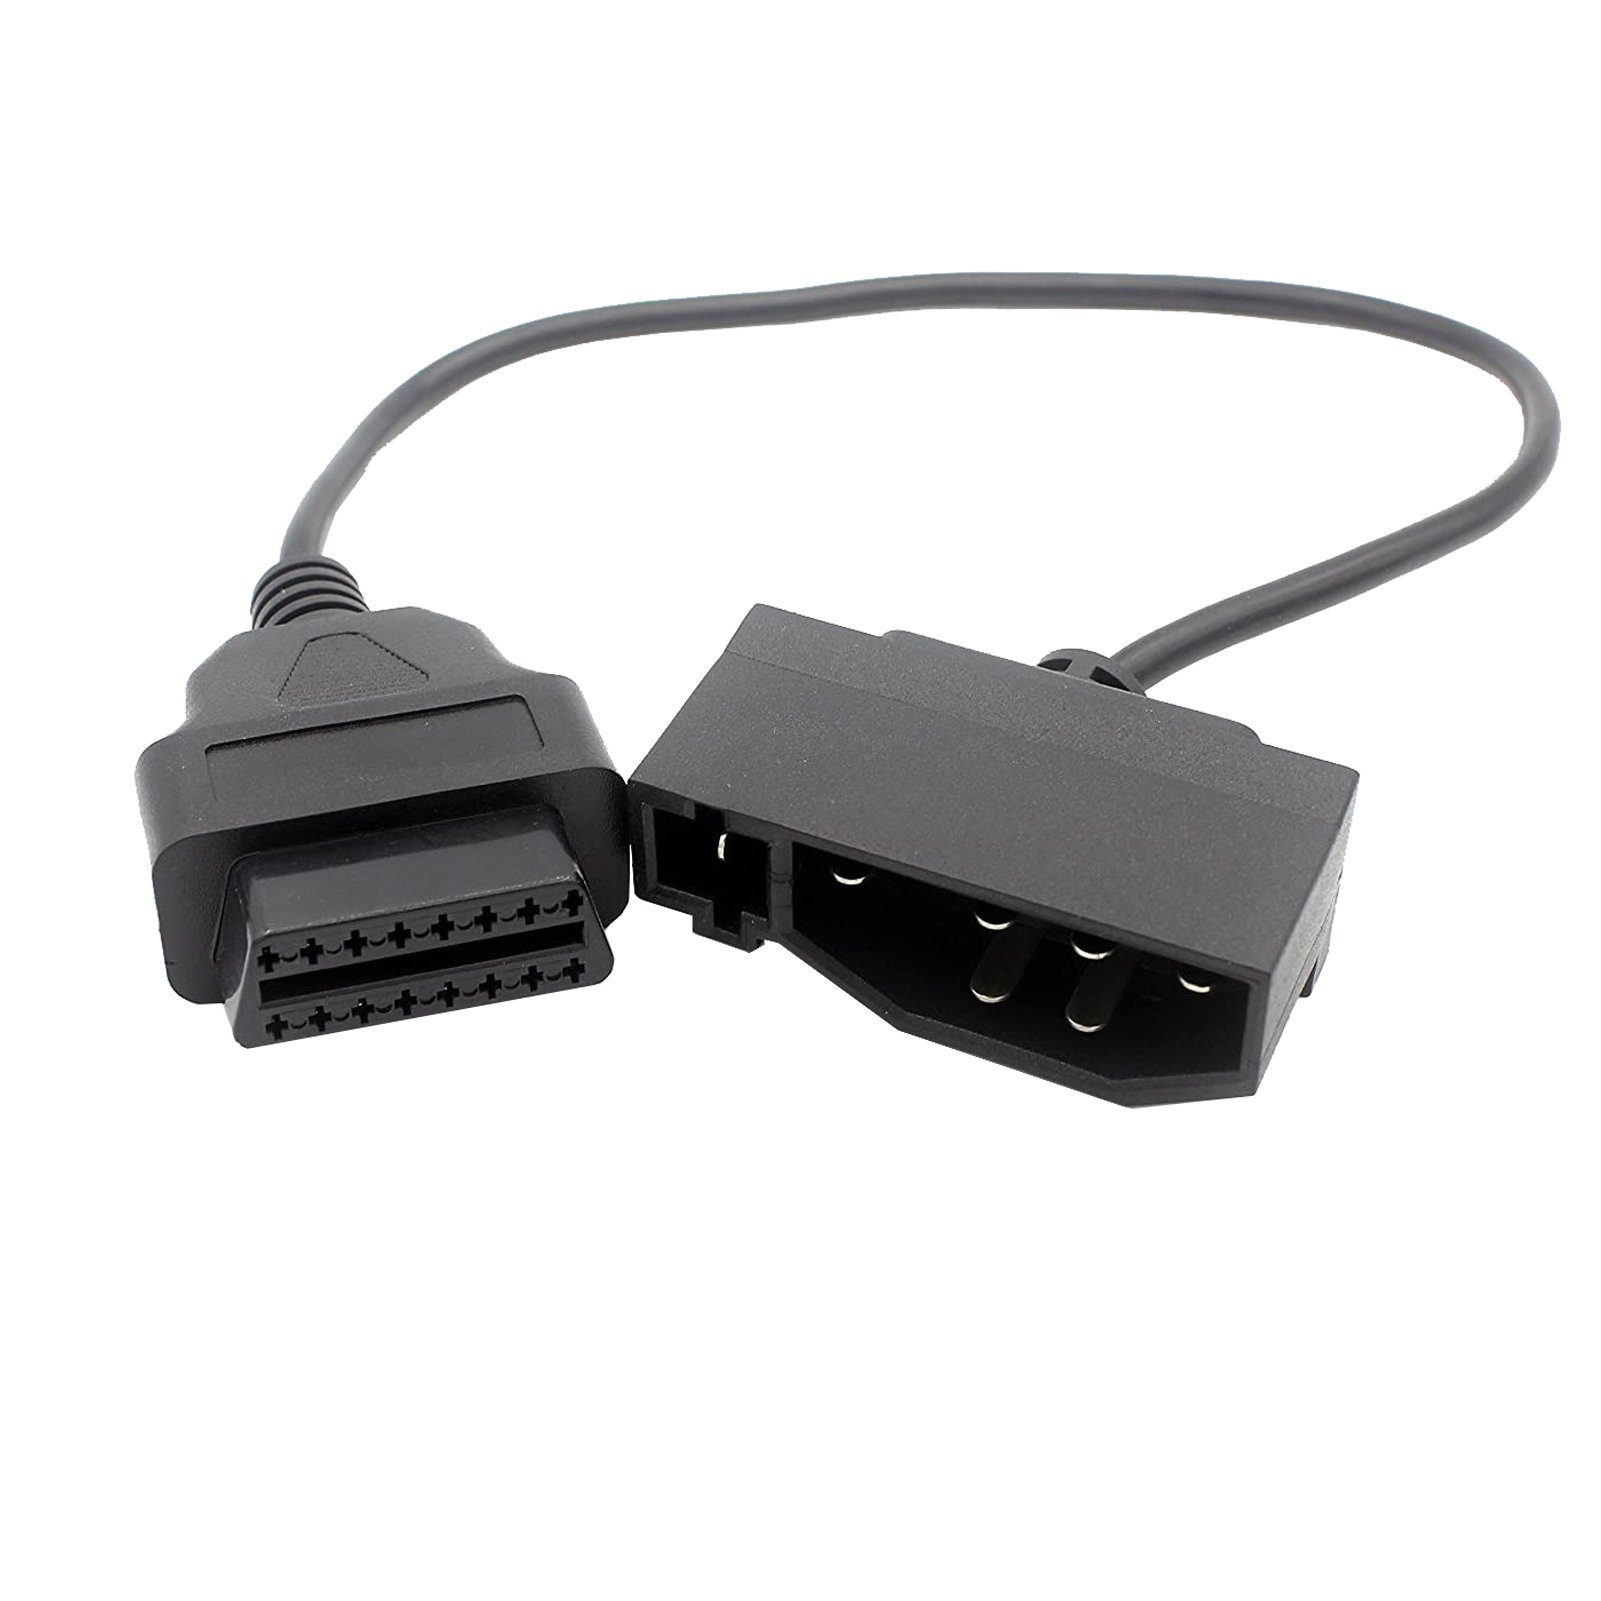 Bolwins F90C 40cm OBD2 Kabel Ford Fehler Auto 7-Pin lesen Diagnose Adapter für Elektro-Kabel